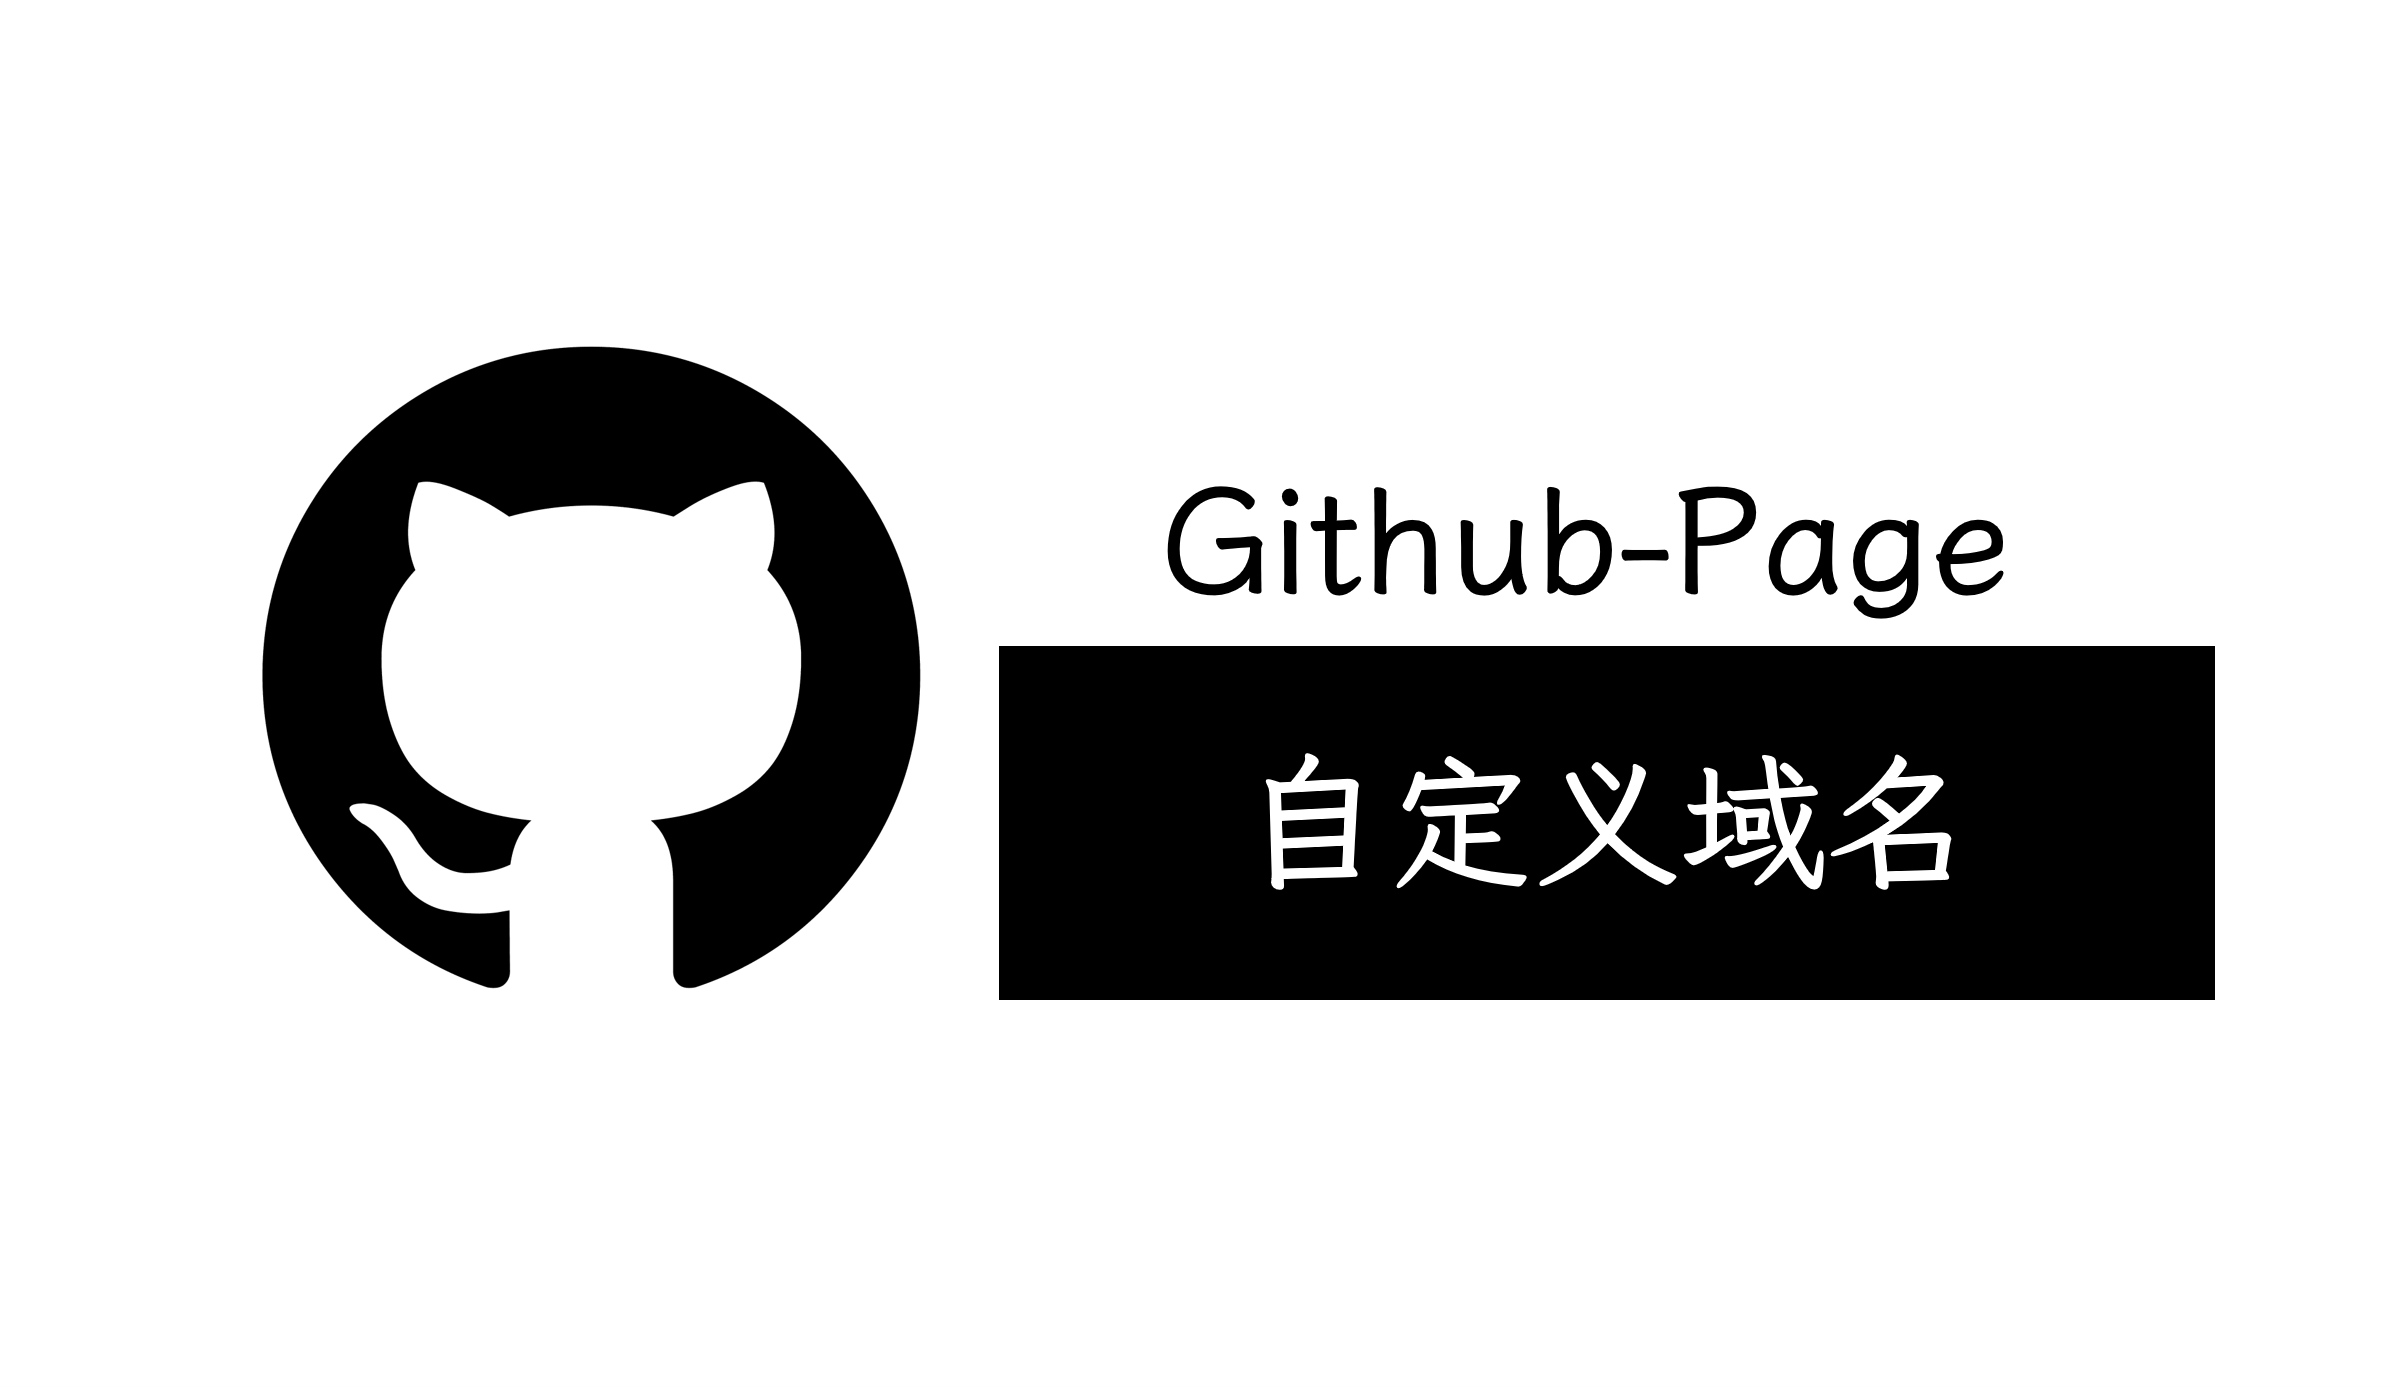 GithubPage-自定义域名